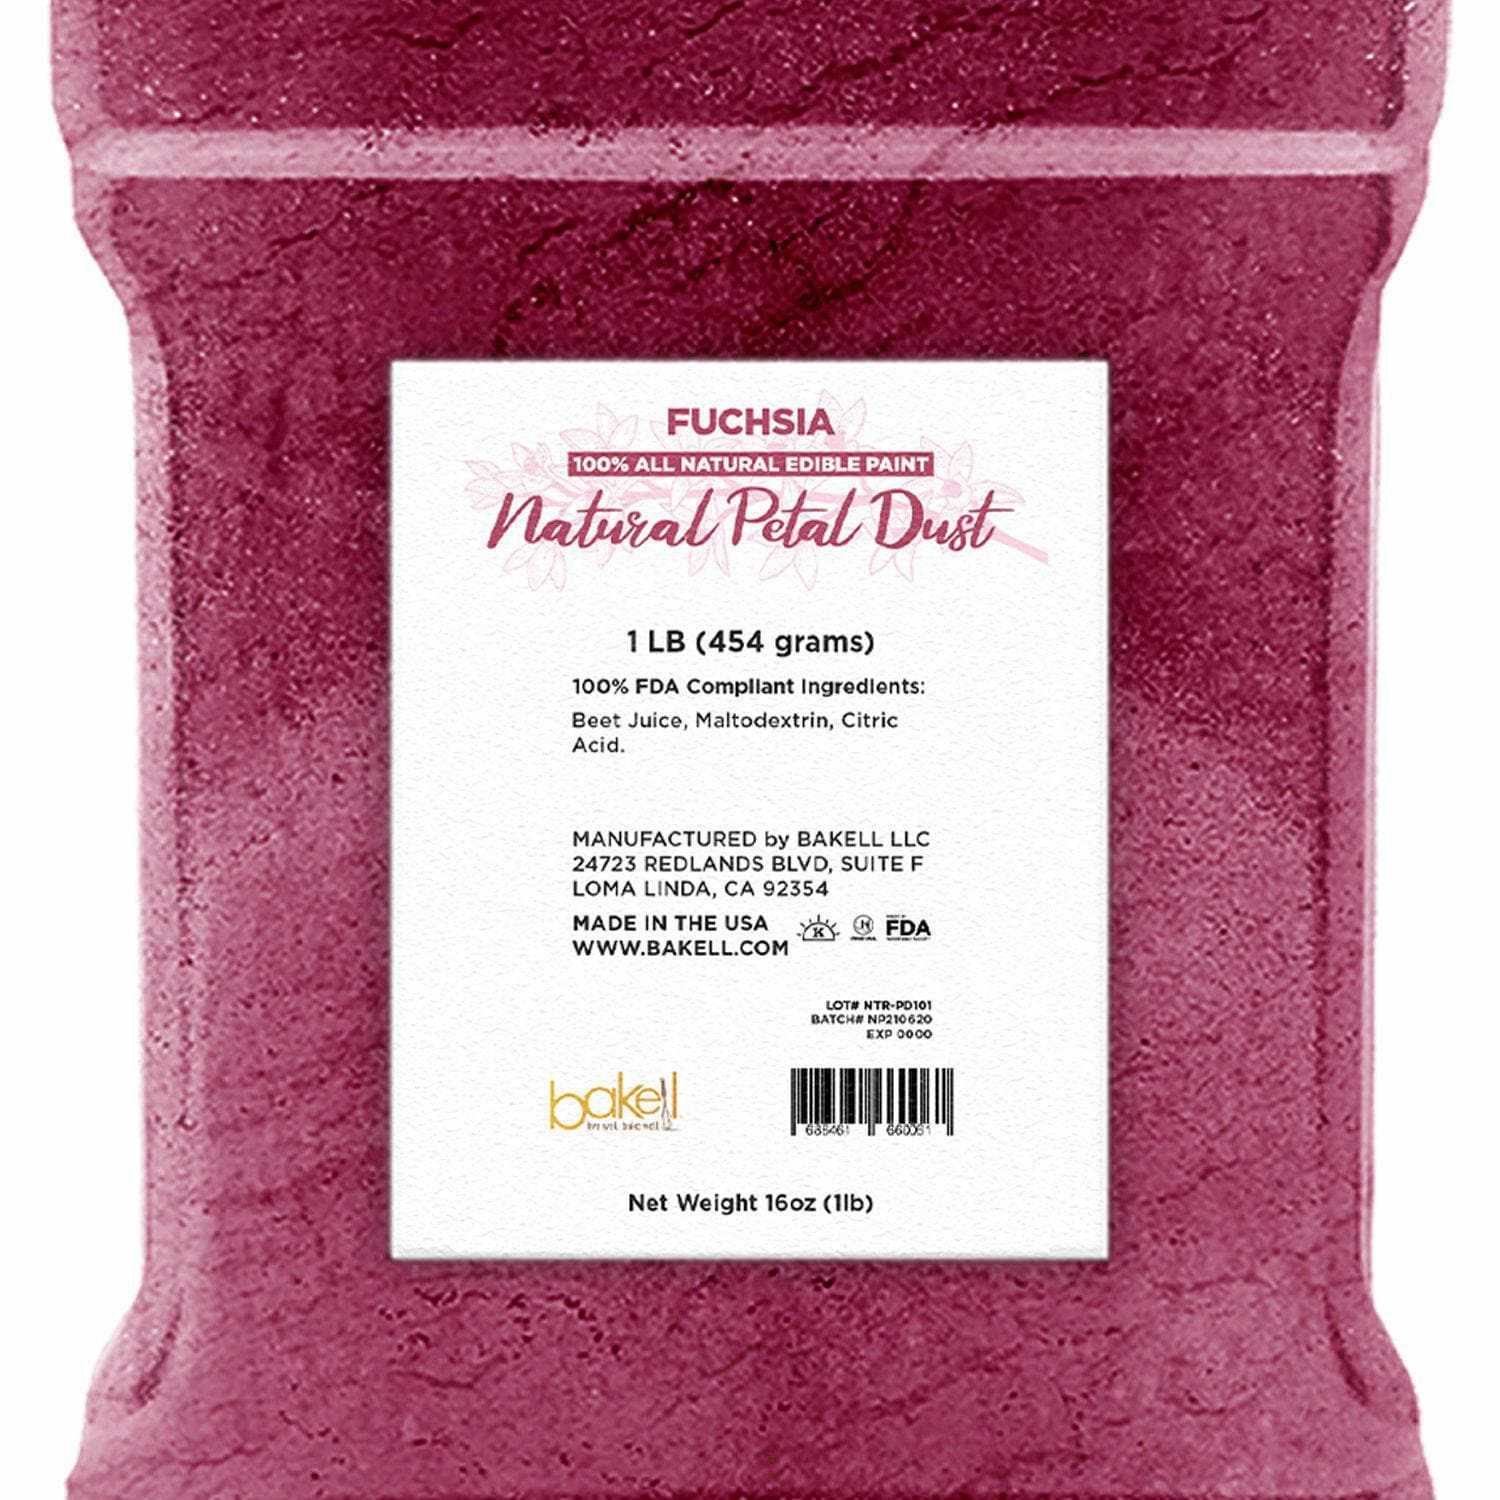 Fuchsia All Natural Petal Dust | Edible Food Coloring Powder | Kosher | Bakell.com